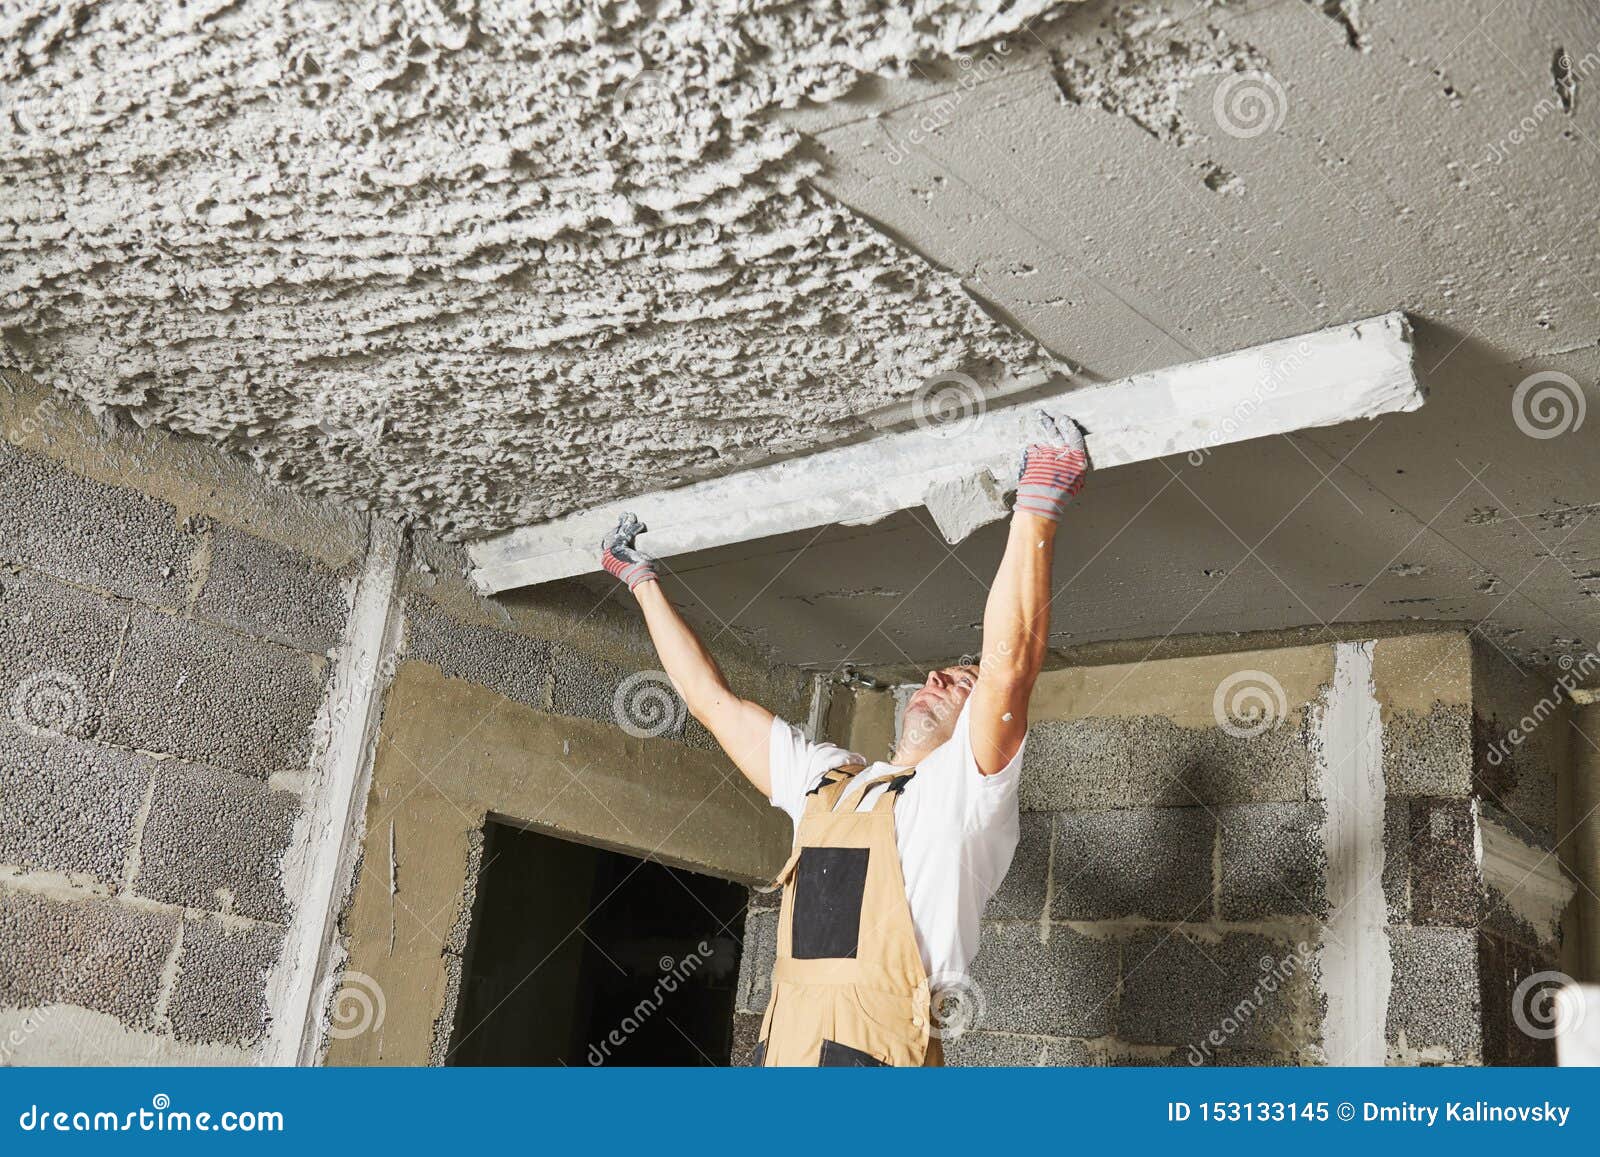 plasterer smoothing plaster mortar on ceiling with screeder